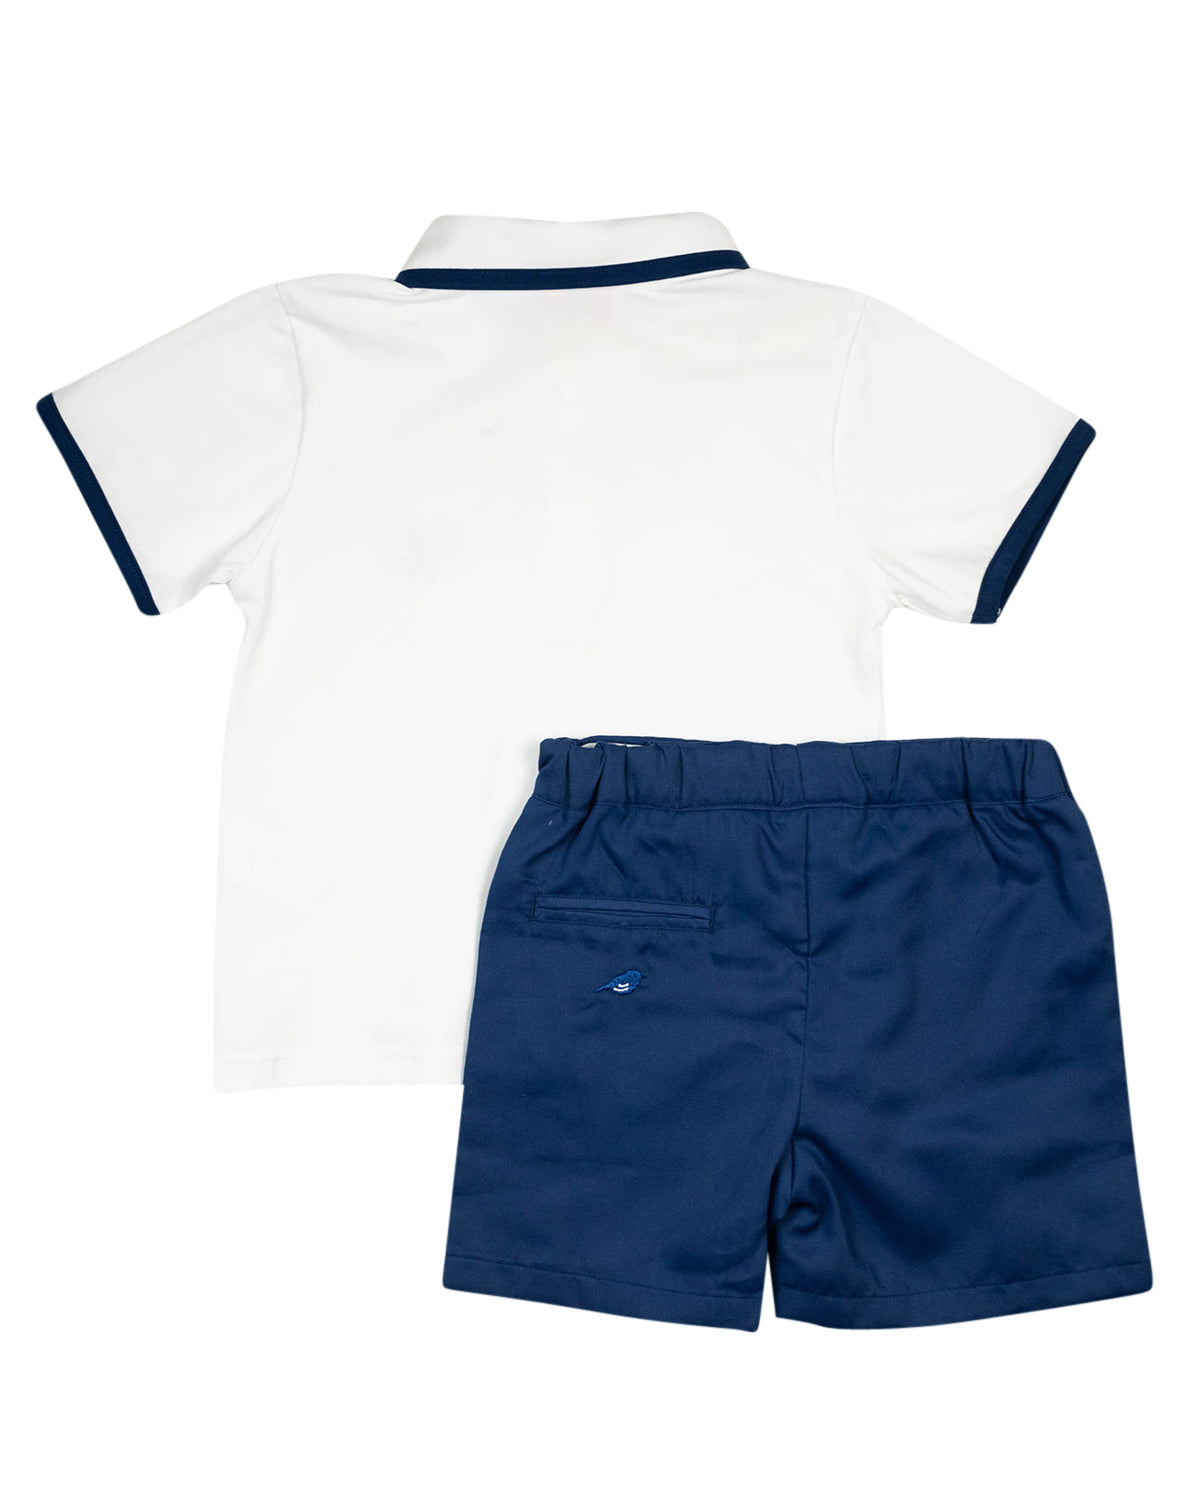 Navy Tennis Shorts Set